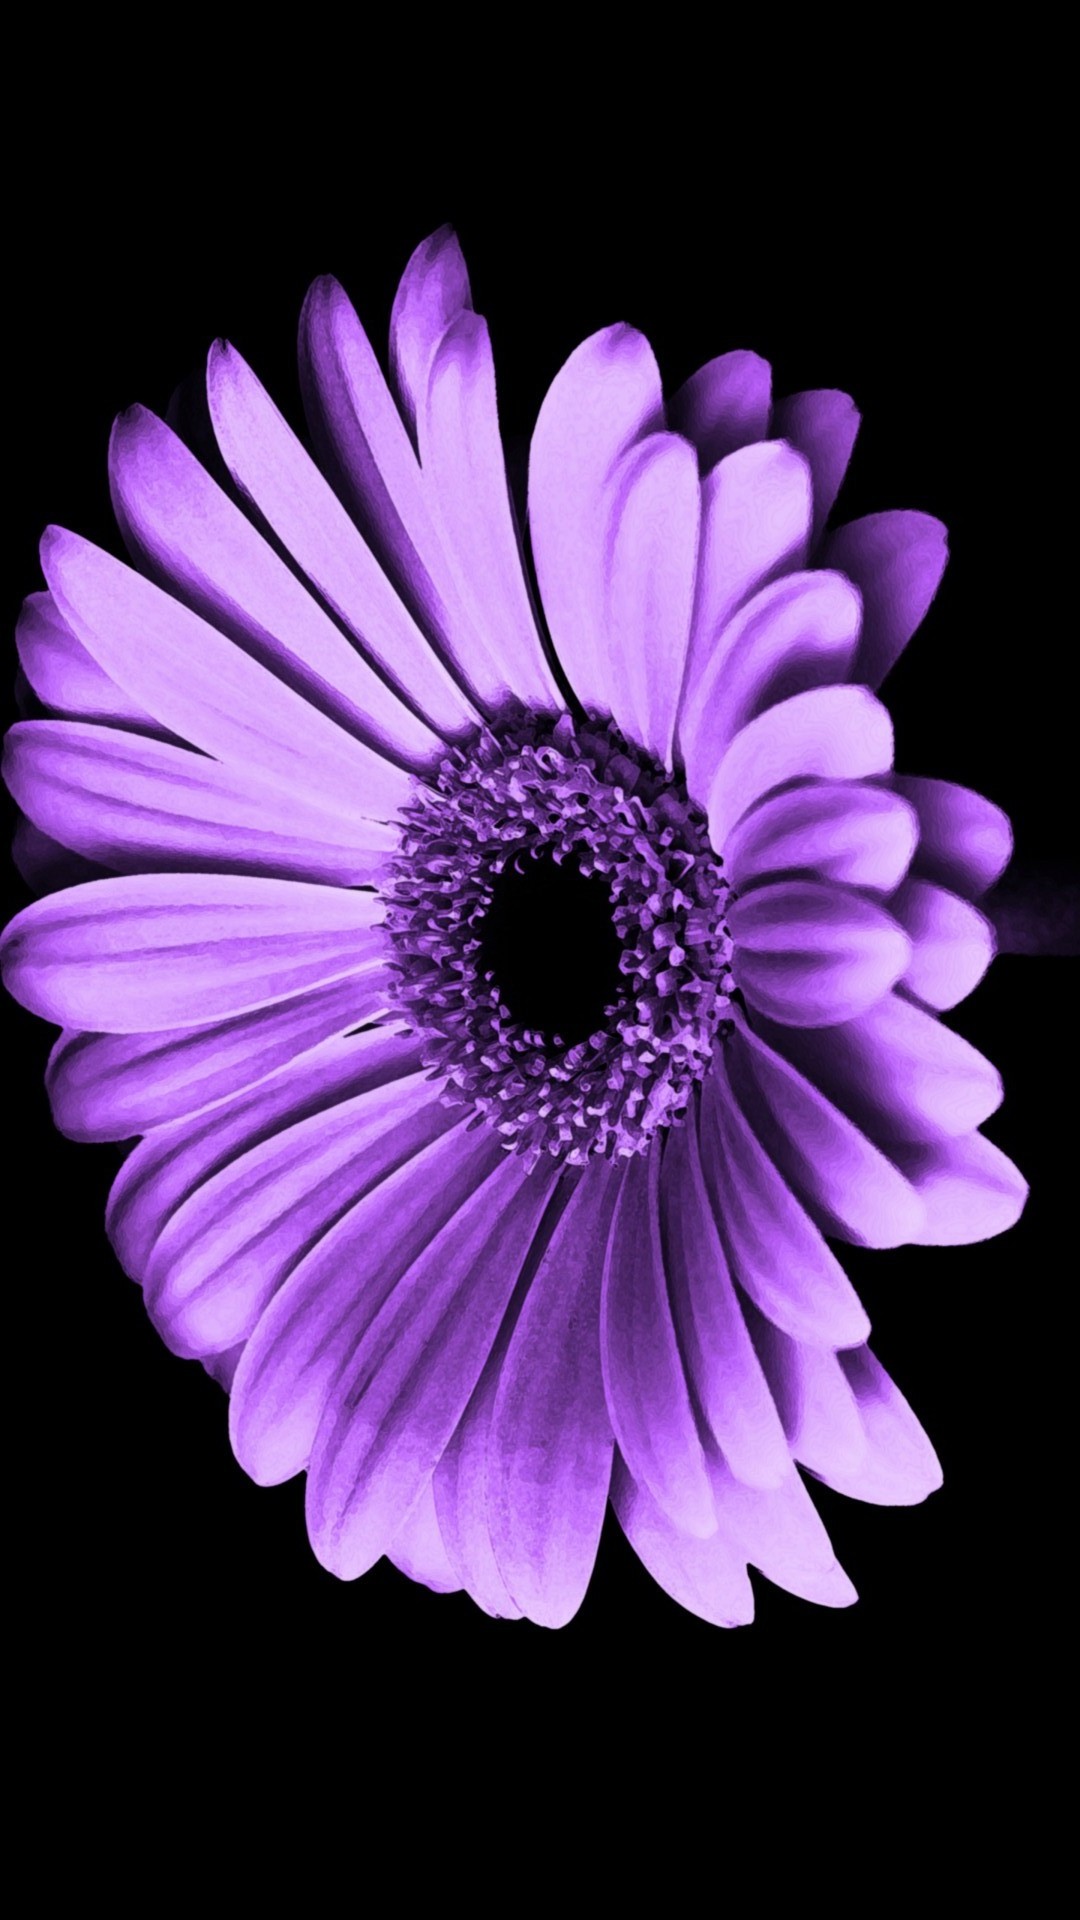 Purple Flowers Iphone Wallpaper Hd 2020 Cute Wallpapers